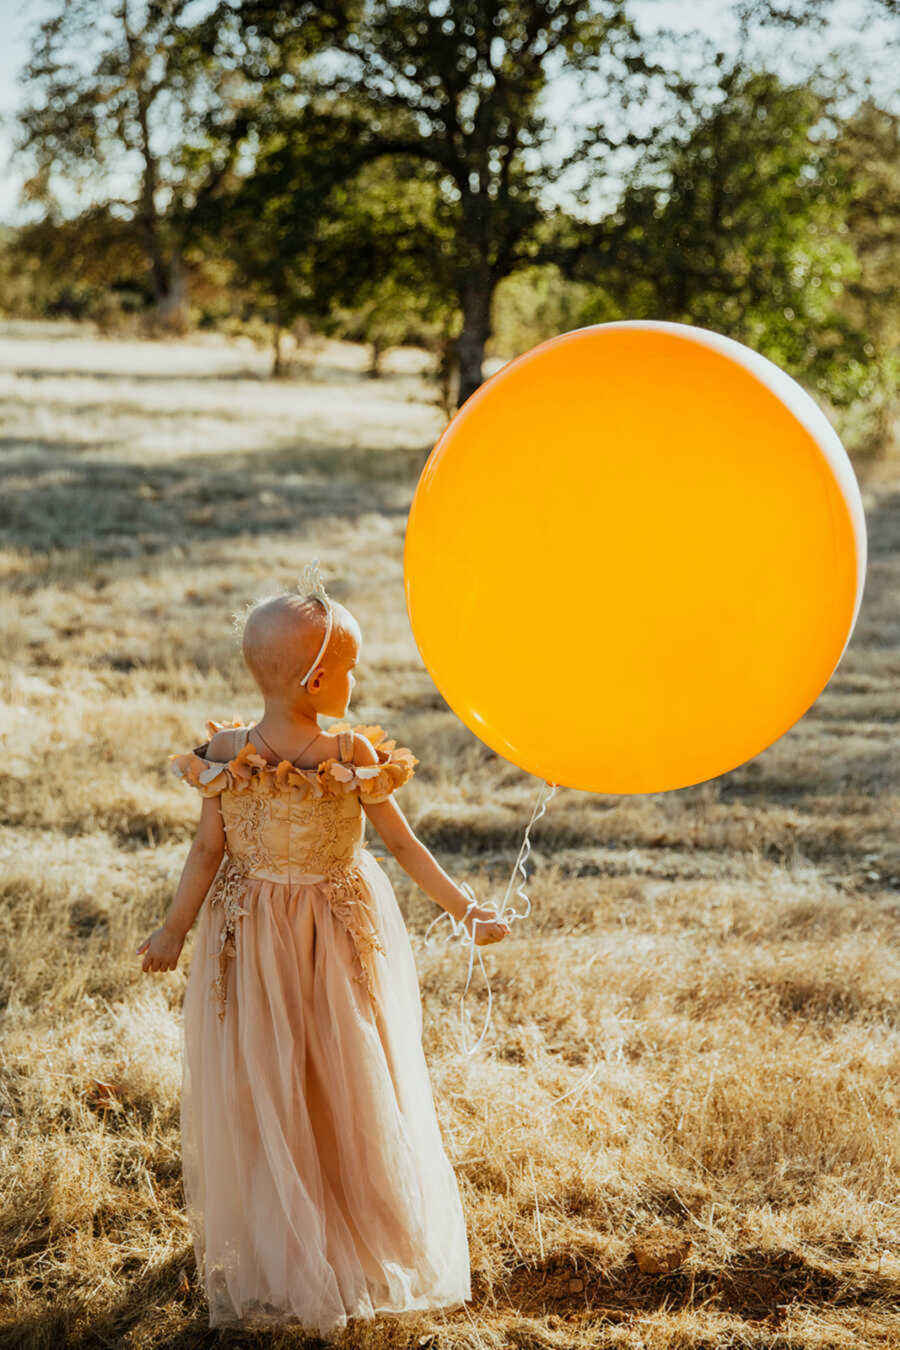 Girl with leukemia holding large yellow balloon in sunshine